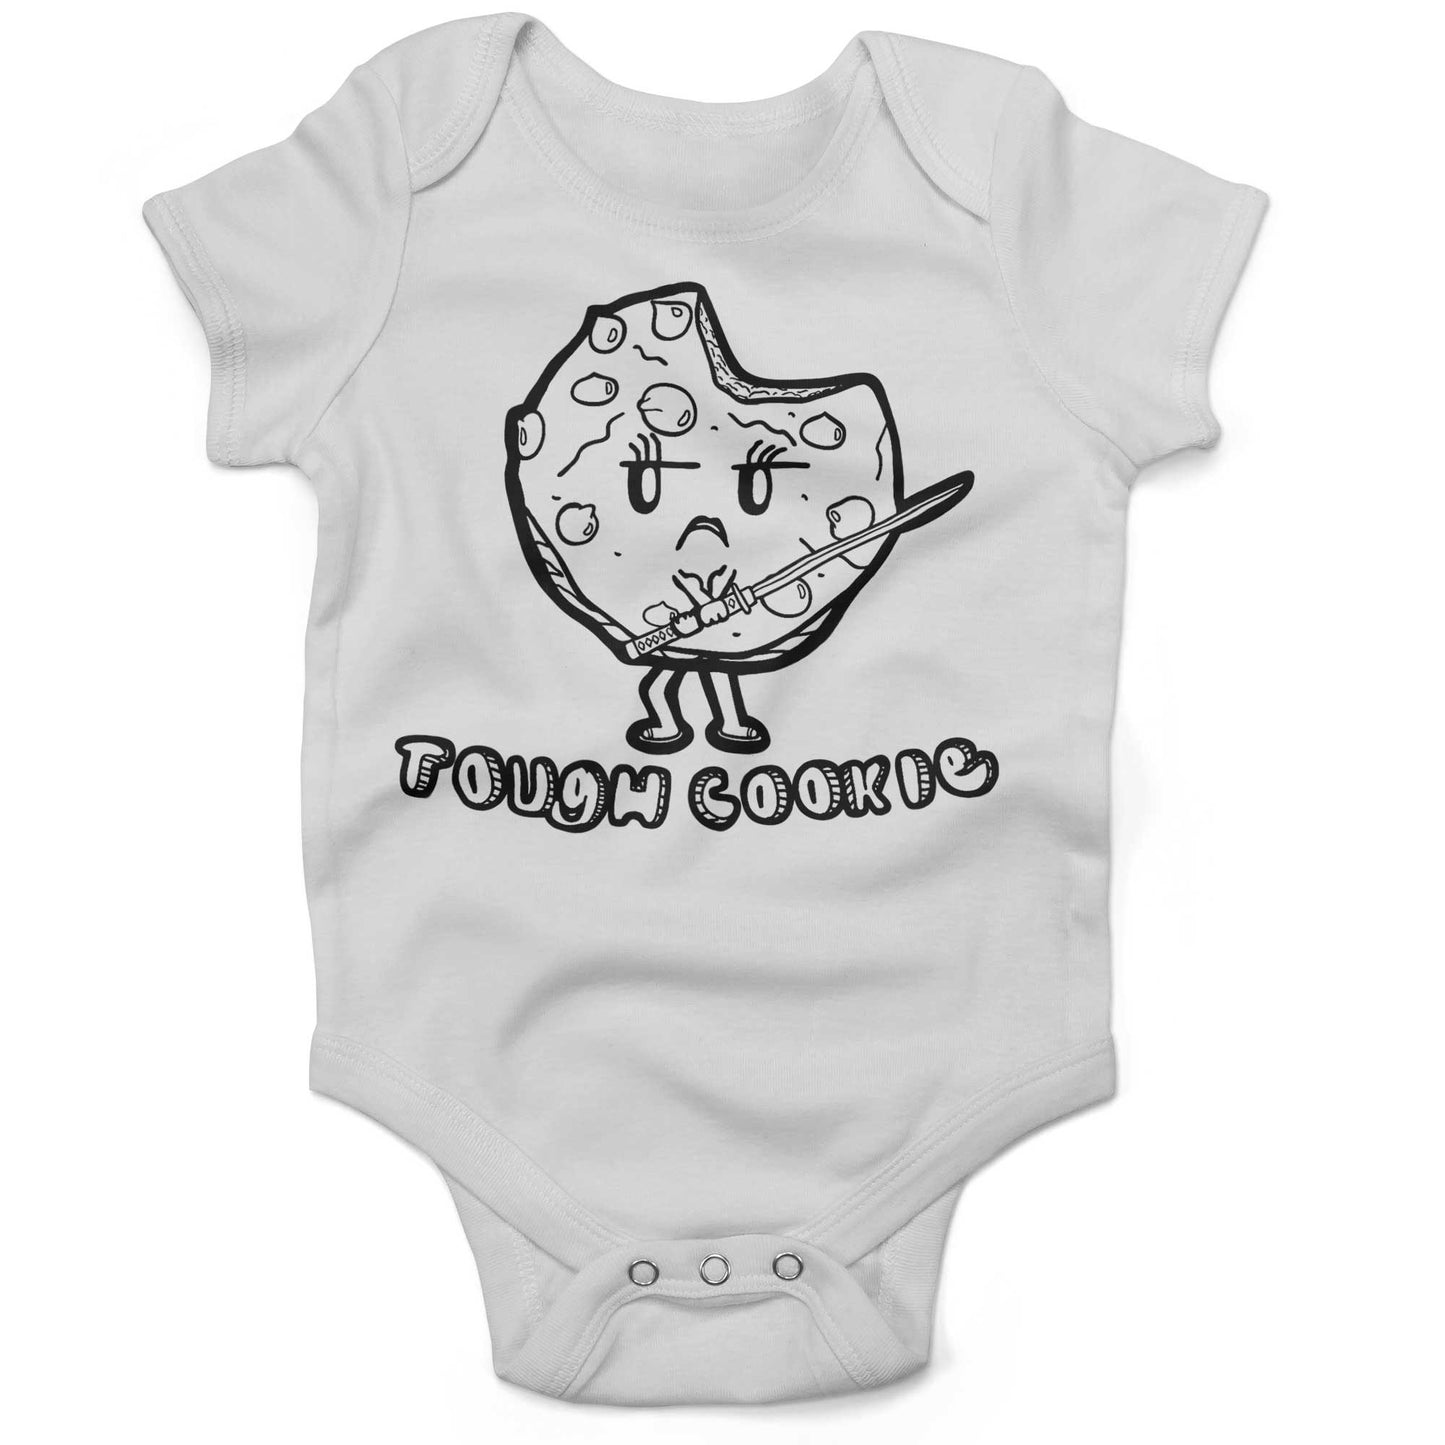 Tough Cookie Infant Bodysuit or Raglan Tee-White-3-6 months